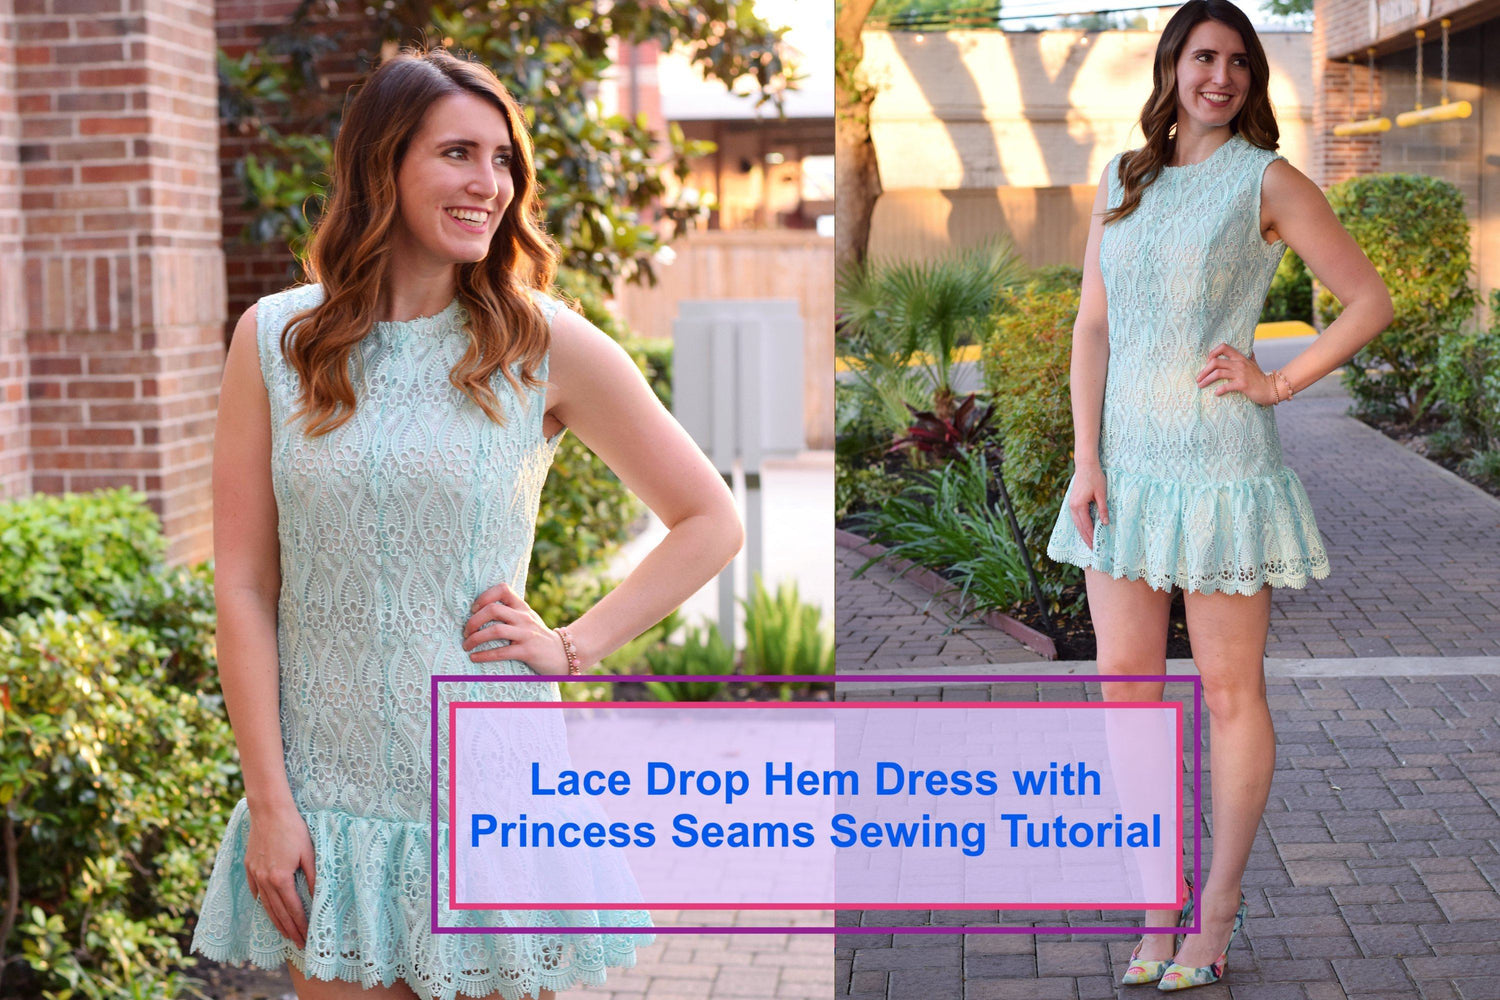 Lace Drop Hem Dress with Princess Seams Sewing Tutorial